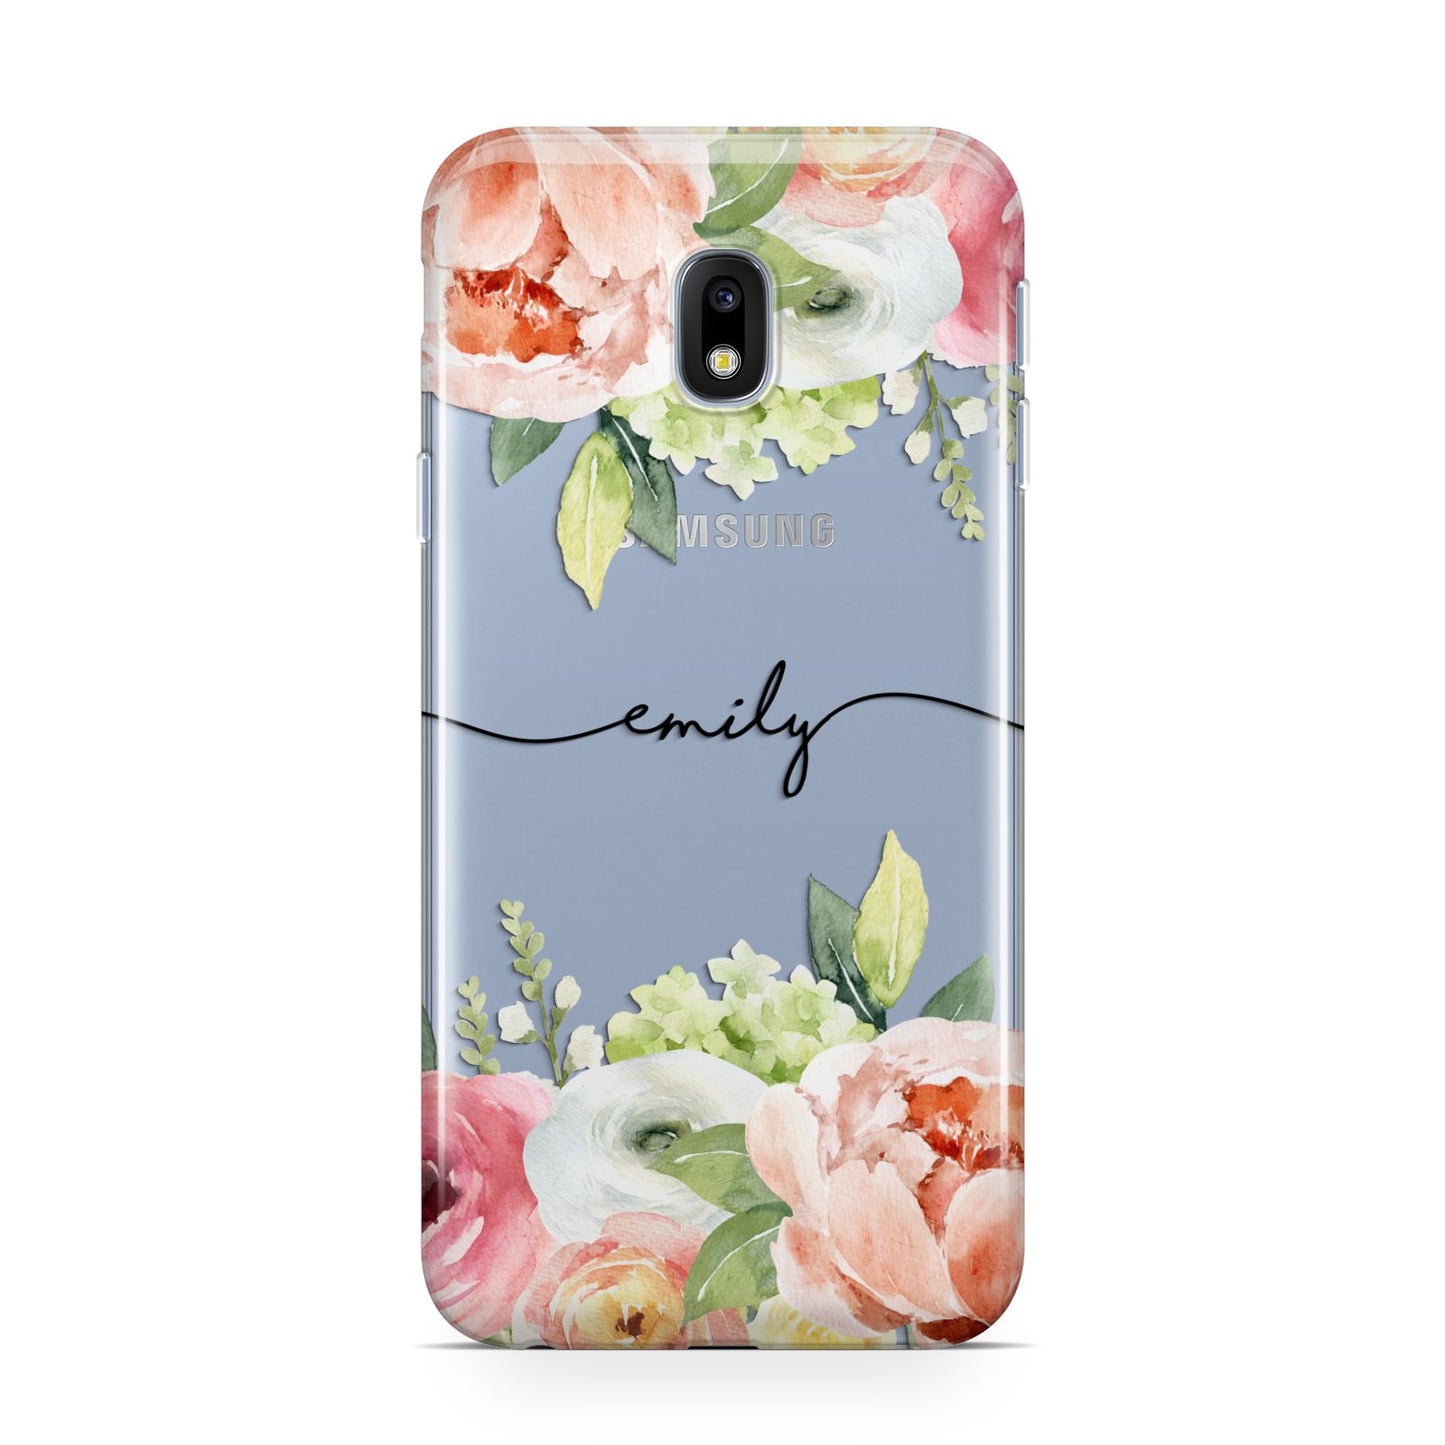 Personalised Flowers Samsung Galaxy J3 2017 Case